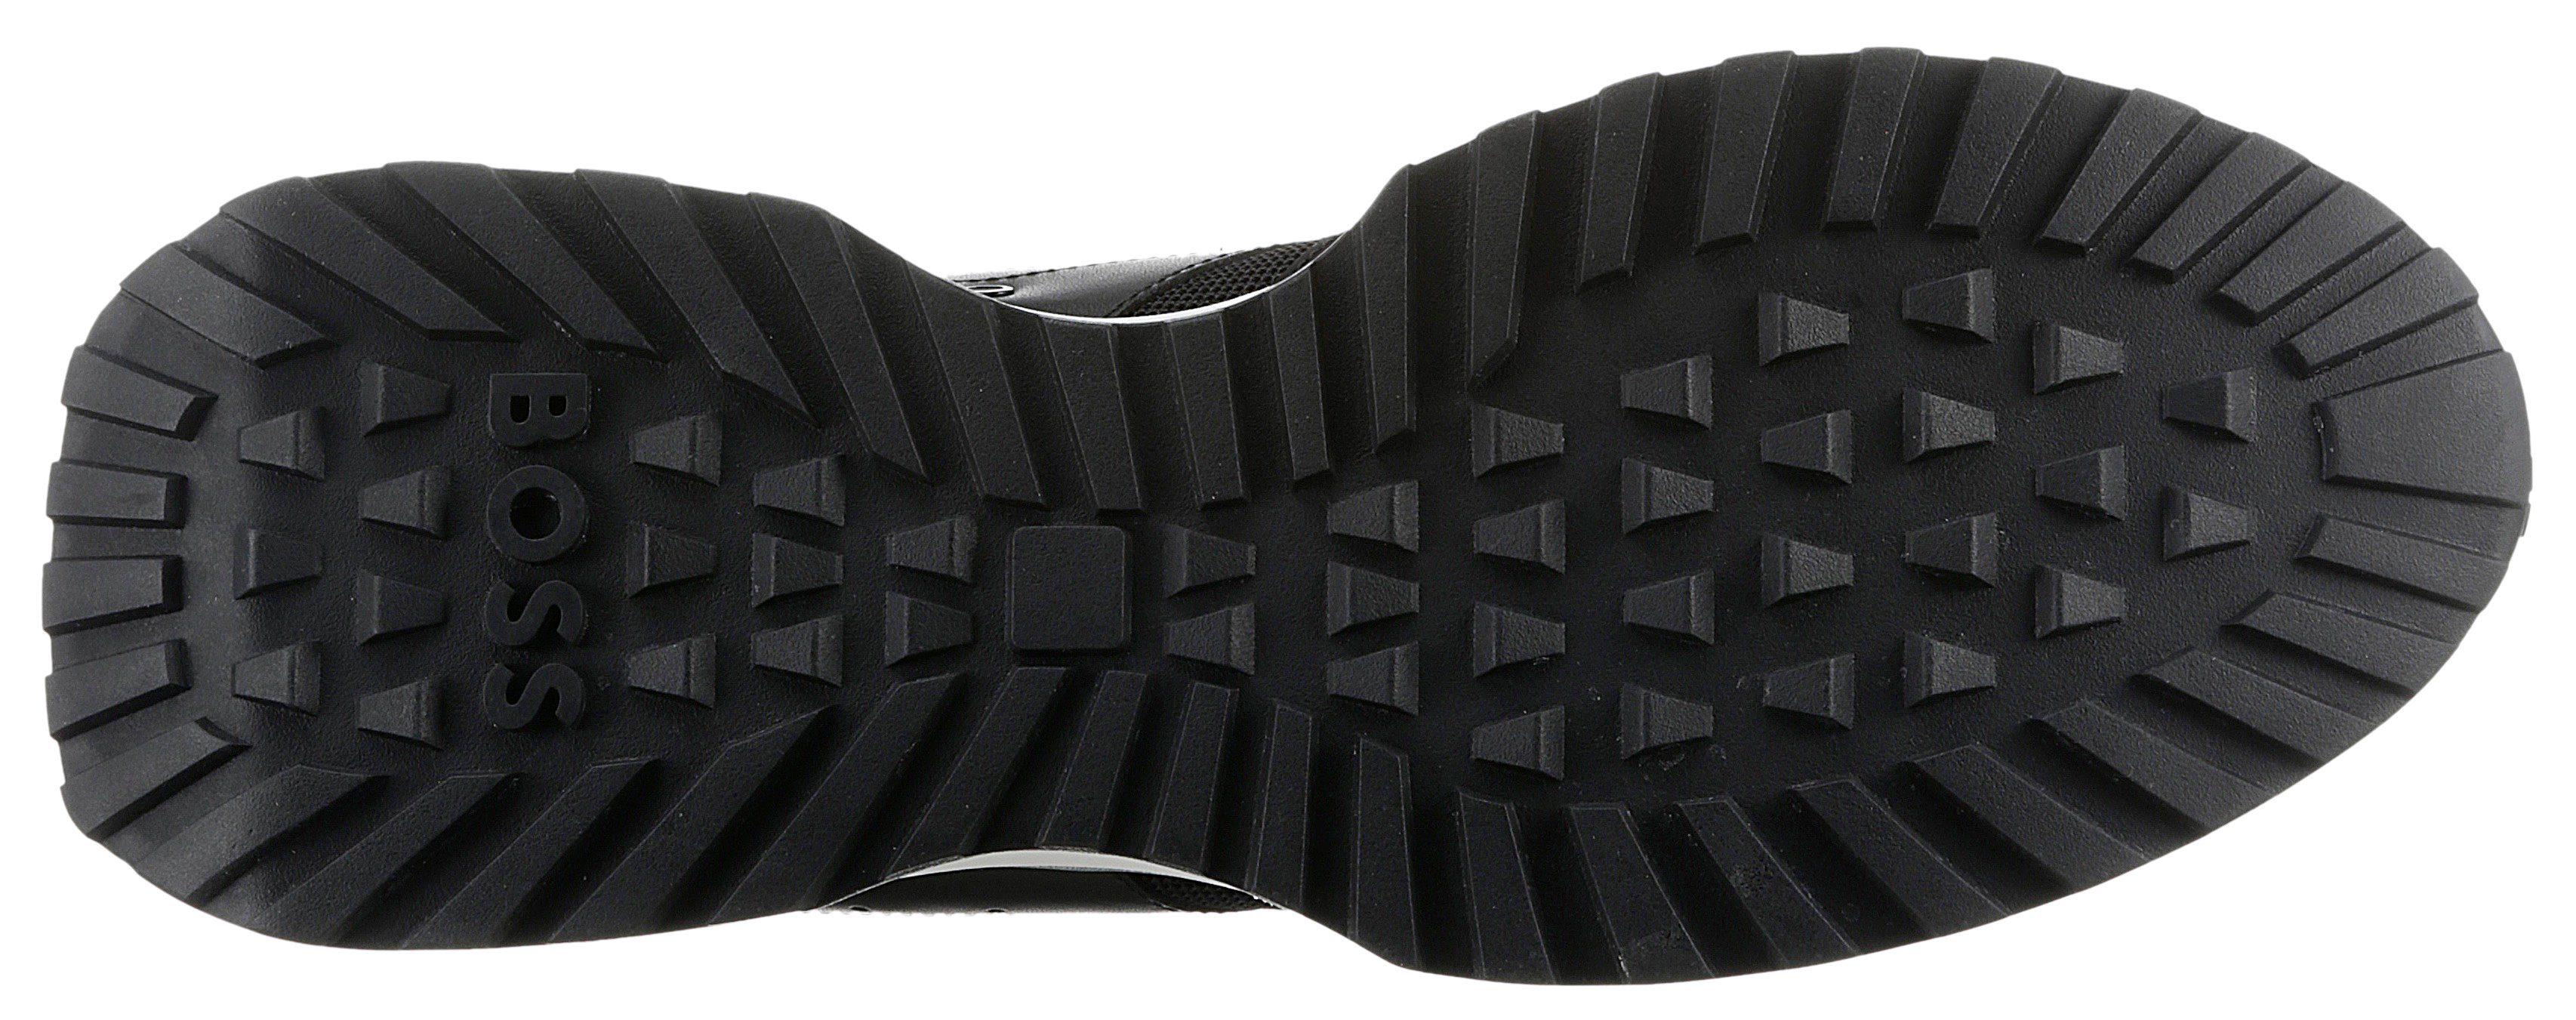 BOSS Jonah_Runn Sneaker mit schwarz BOSS-Markenlabel kombiniert